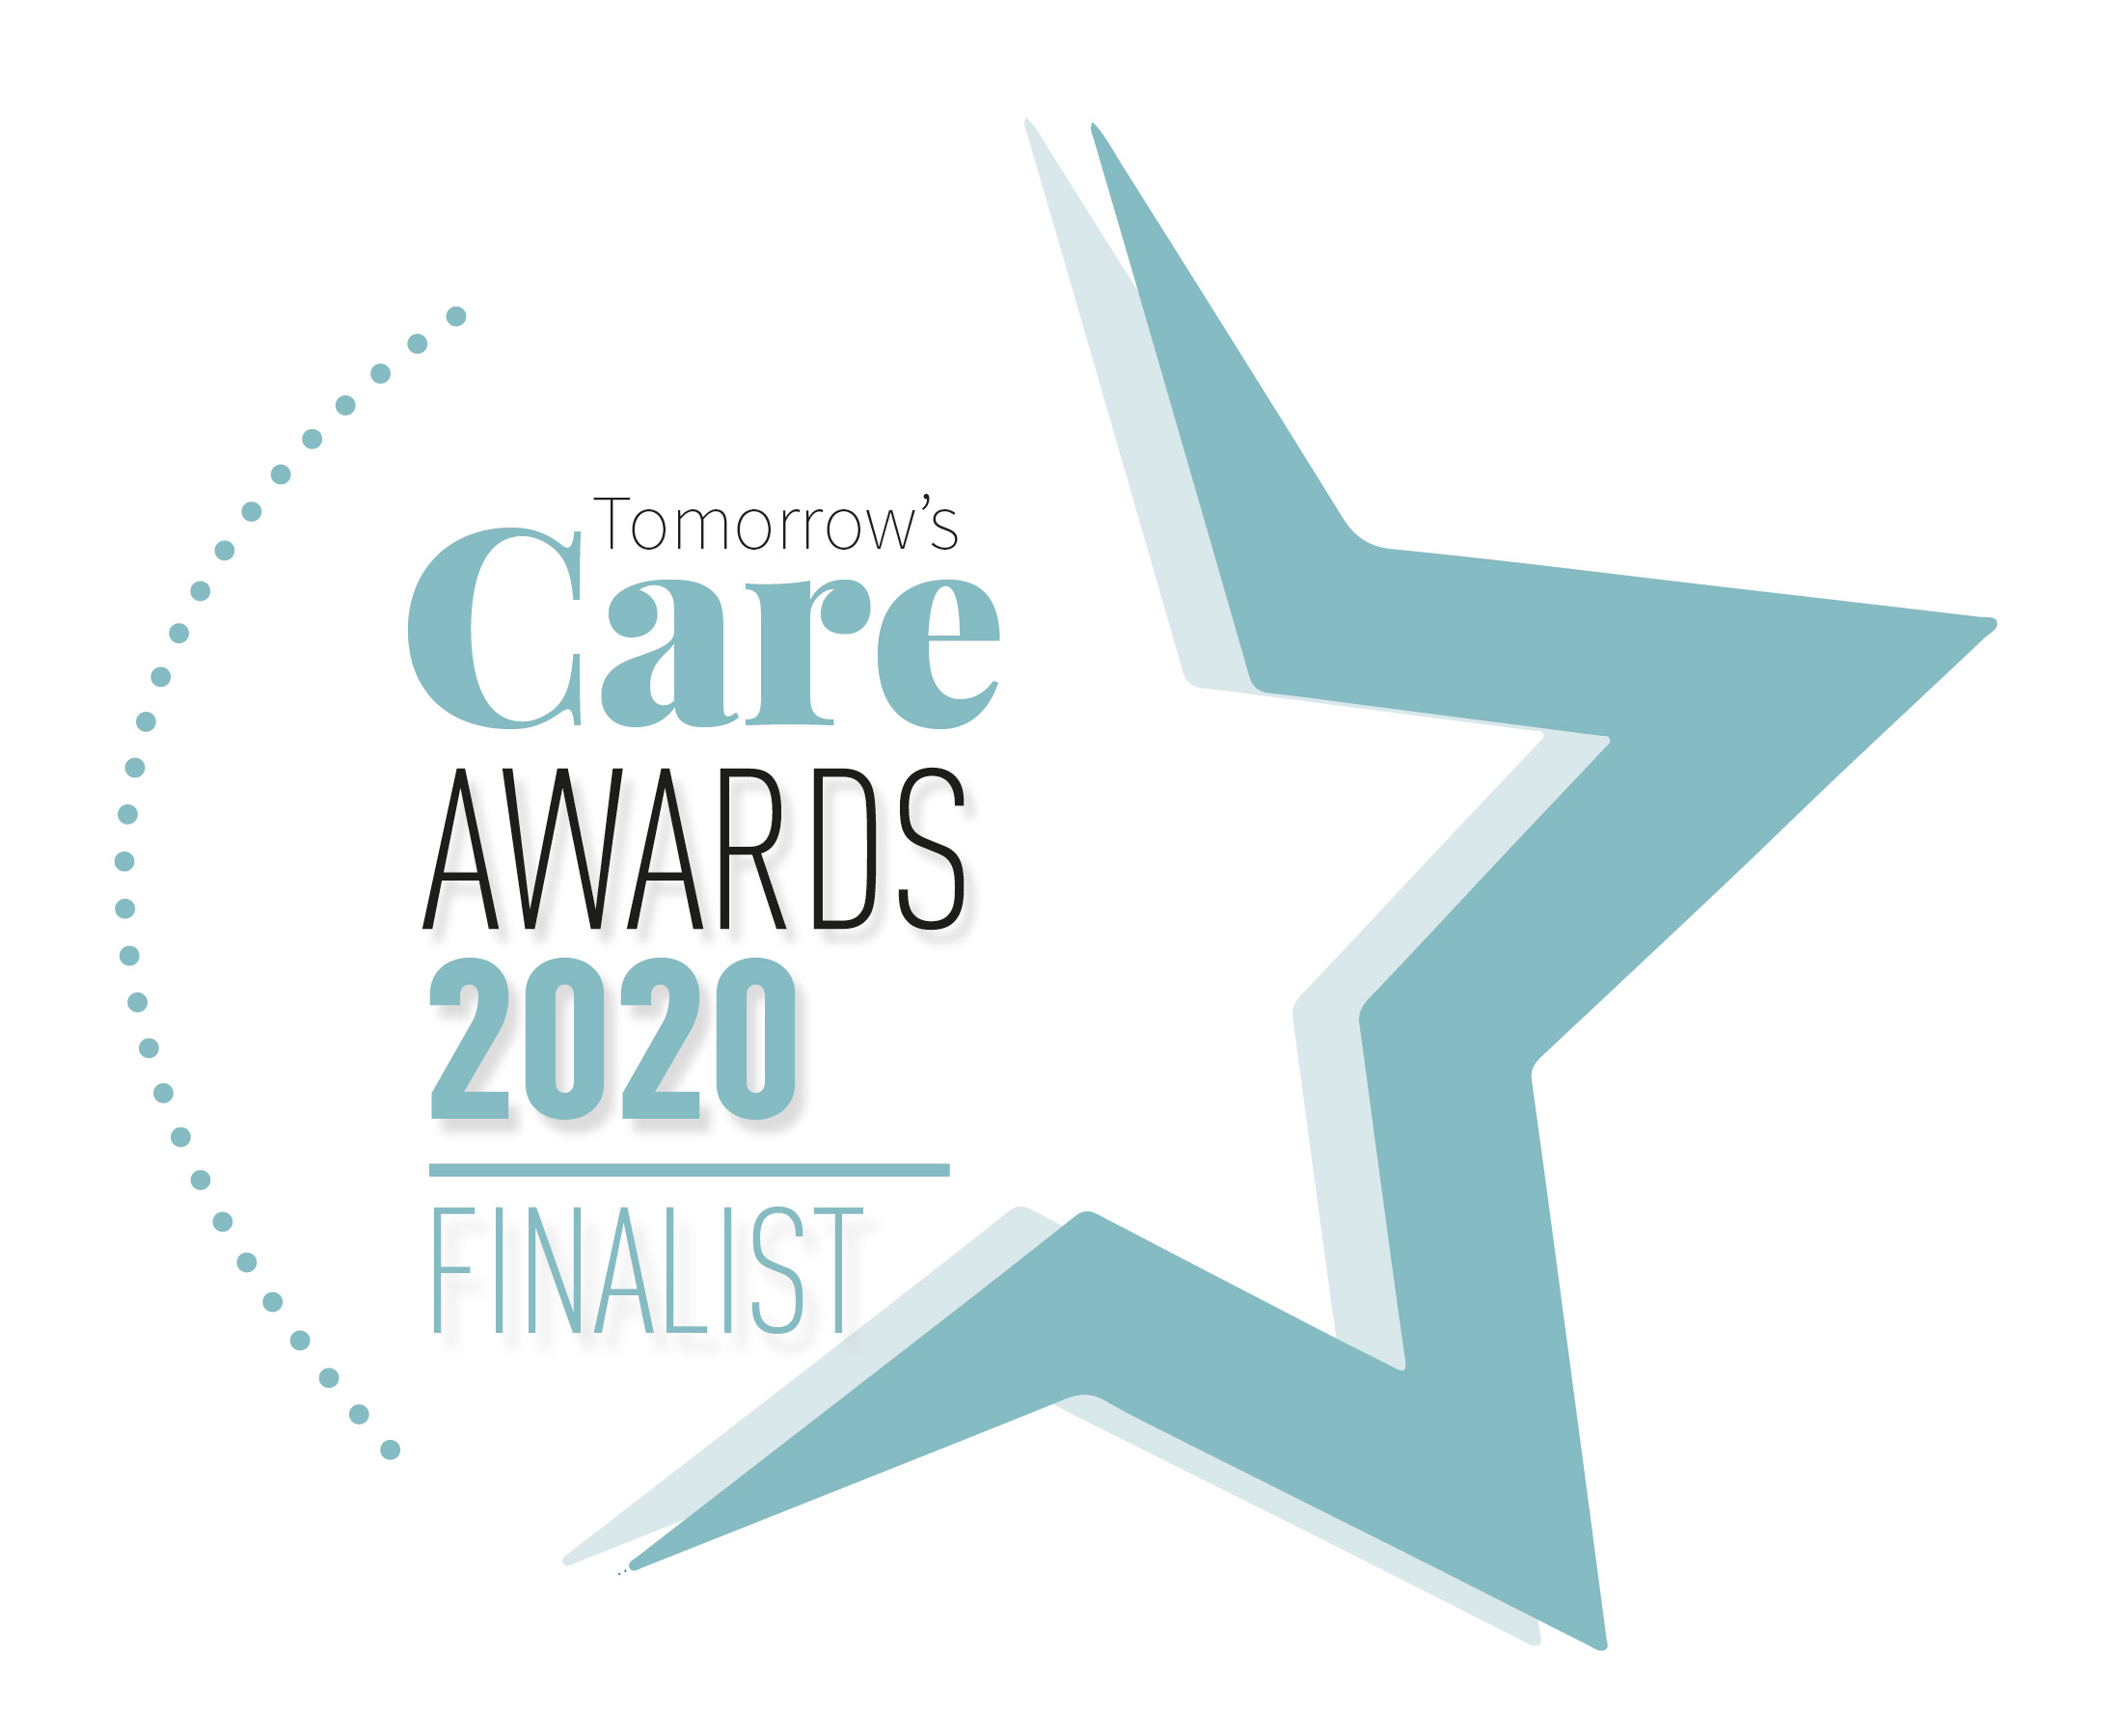 Tommorow's Care Award 2020 Finalist